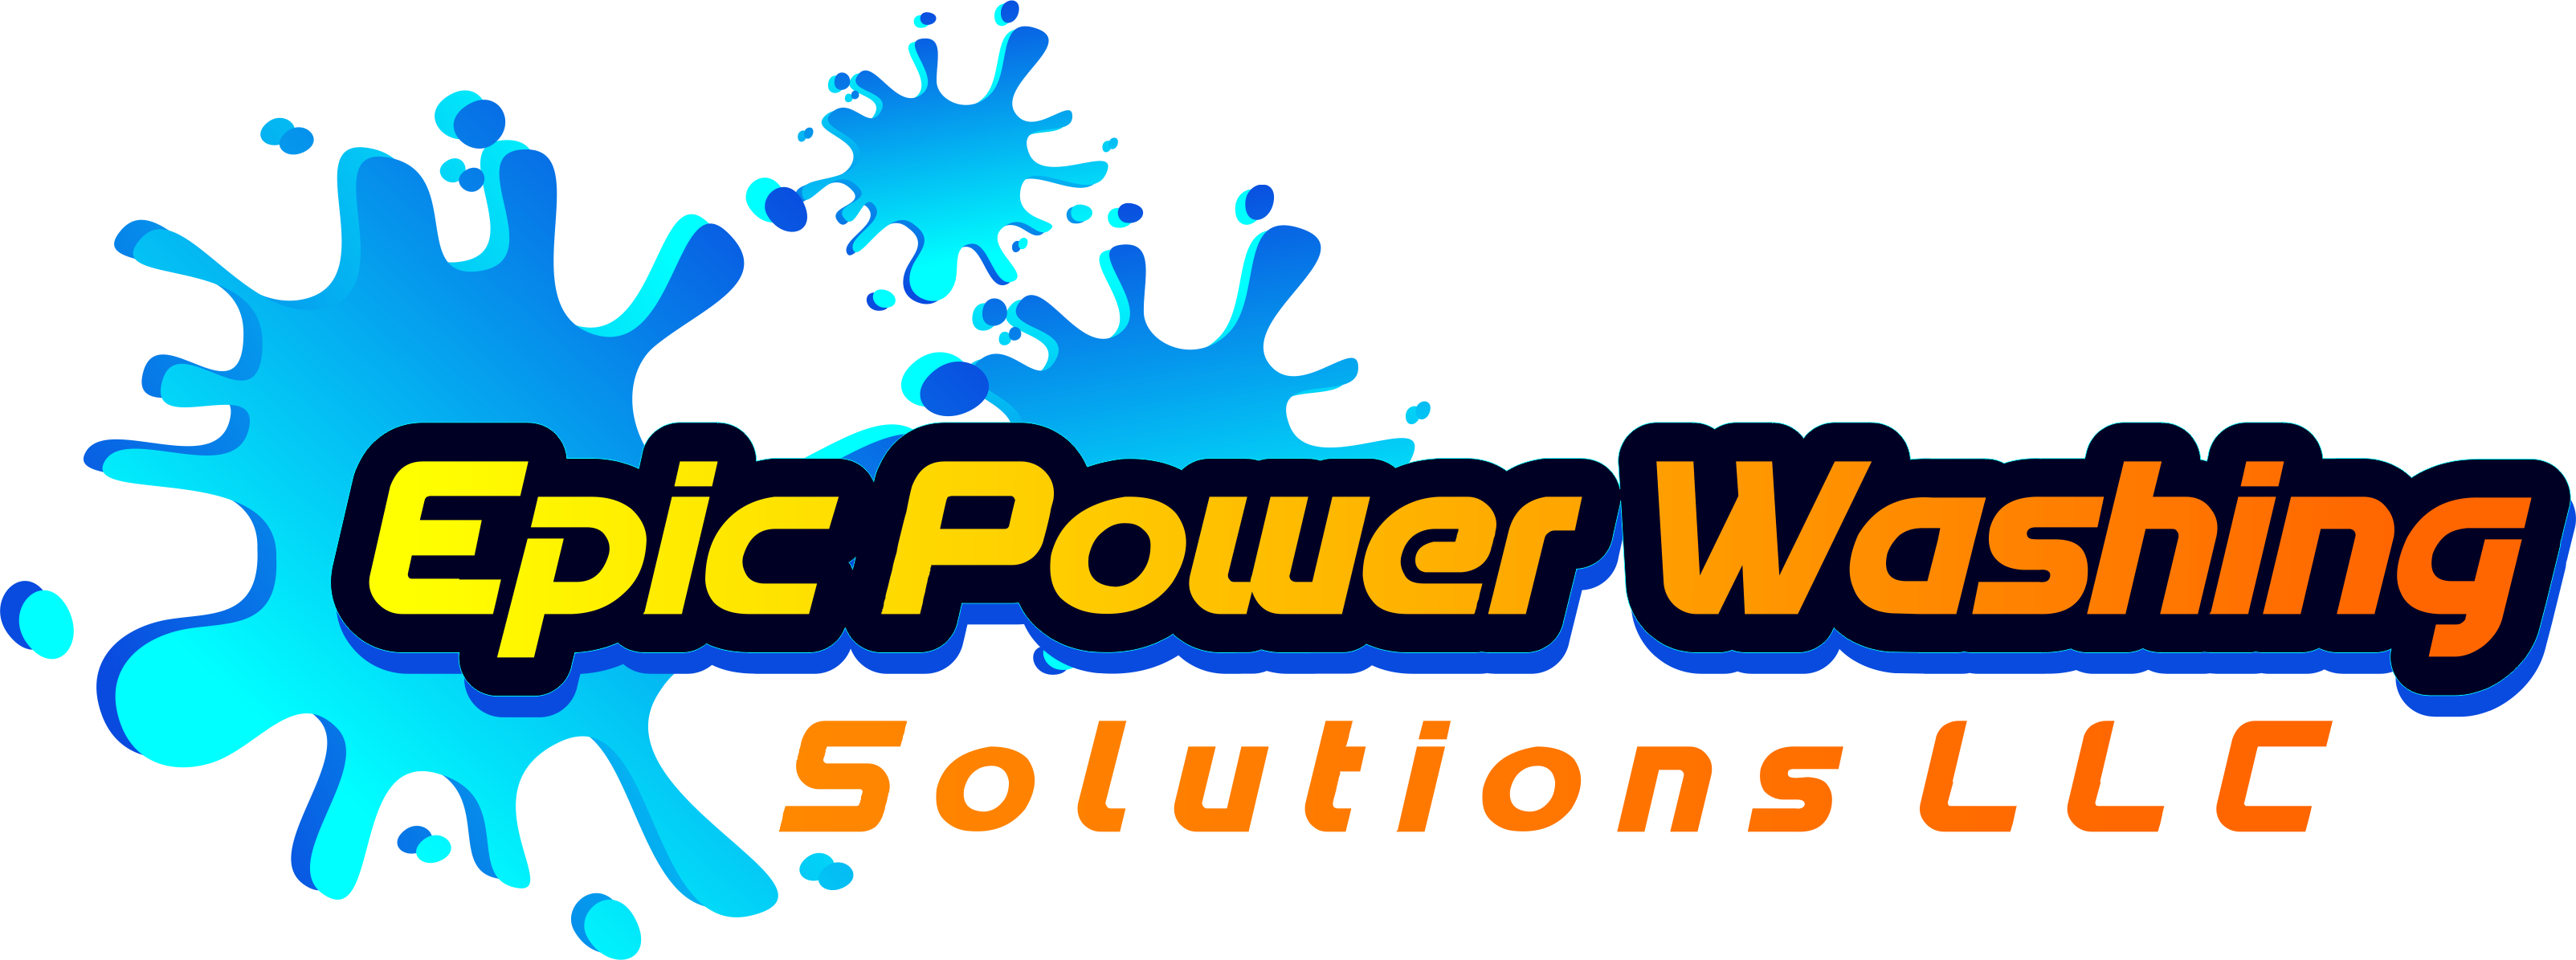 Epic Power Washing Solutions LLC